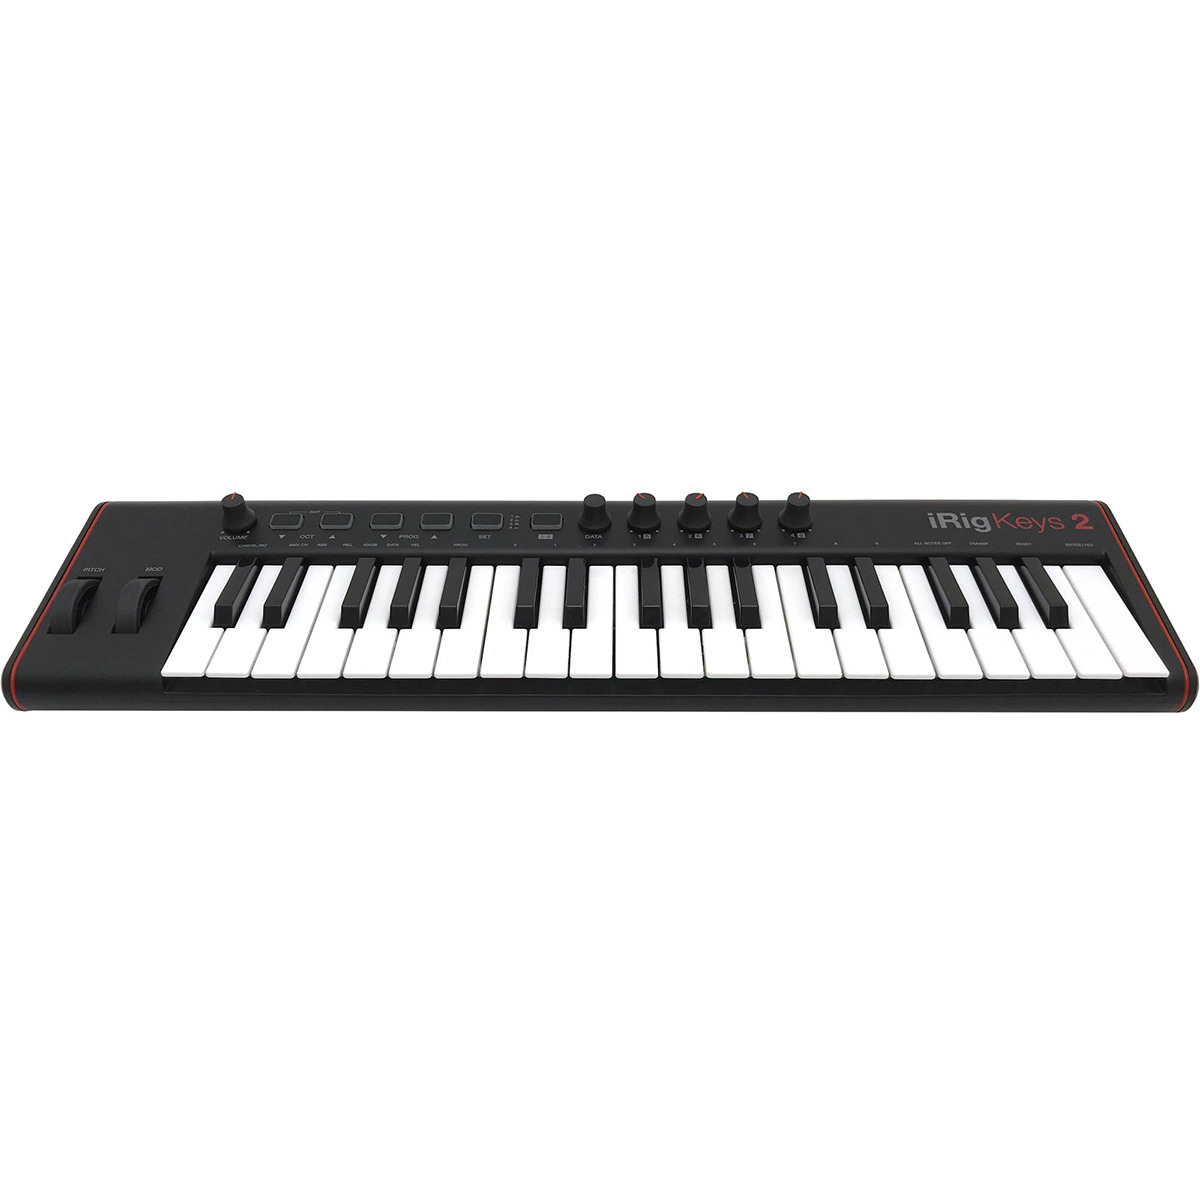 MIDI клавиатуры IK Multimedia iRig Keys 2 контроллер midi клавиатуры worlde panda с 25 клавишами и midi контроллер drum pad